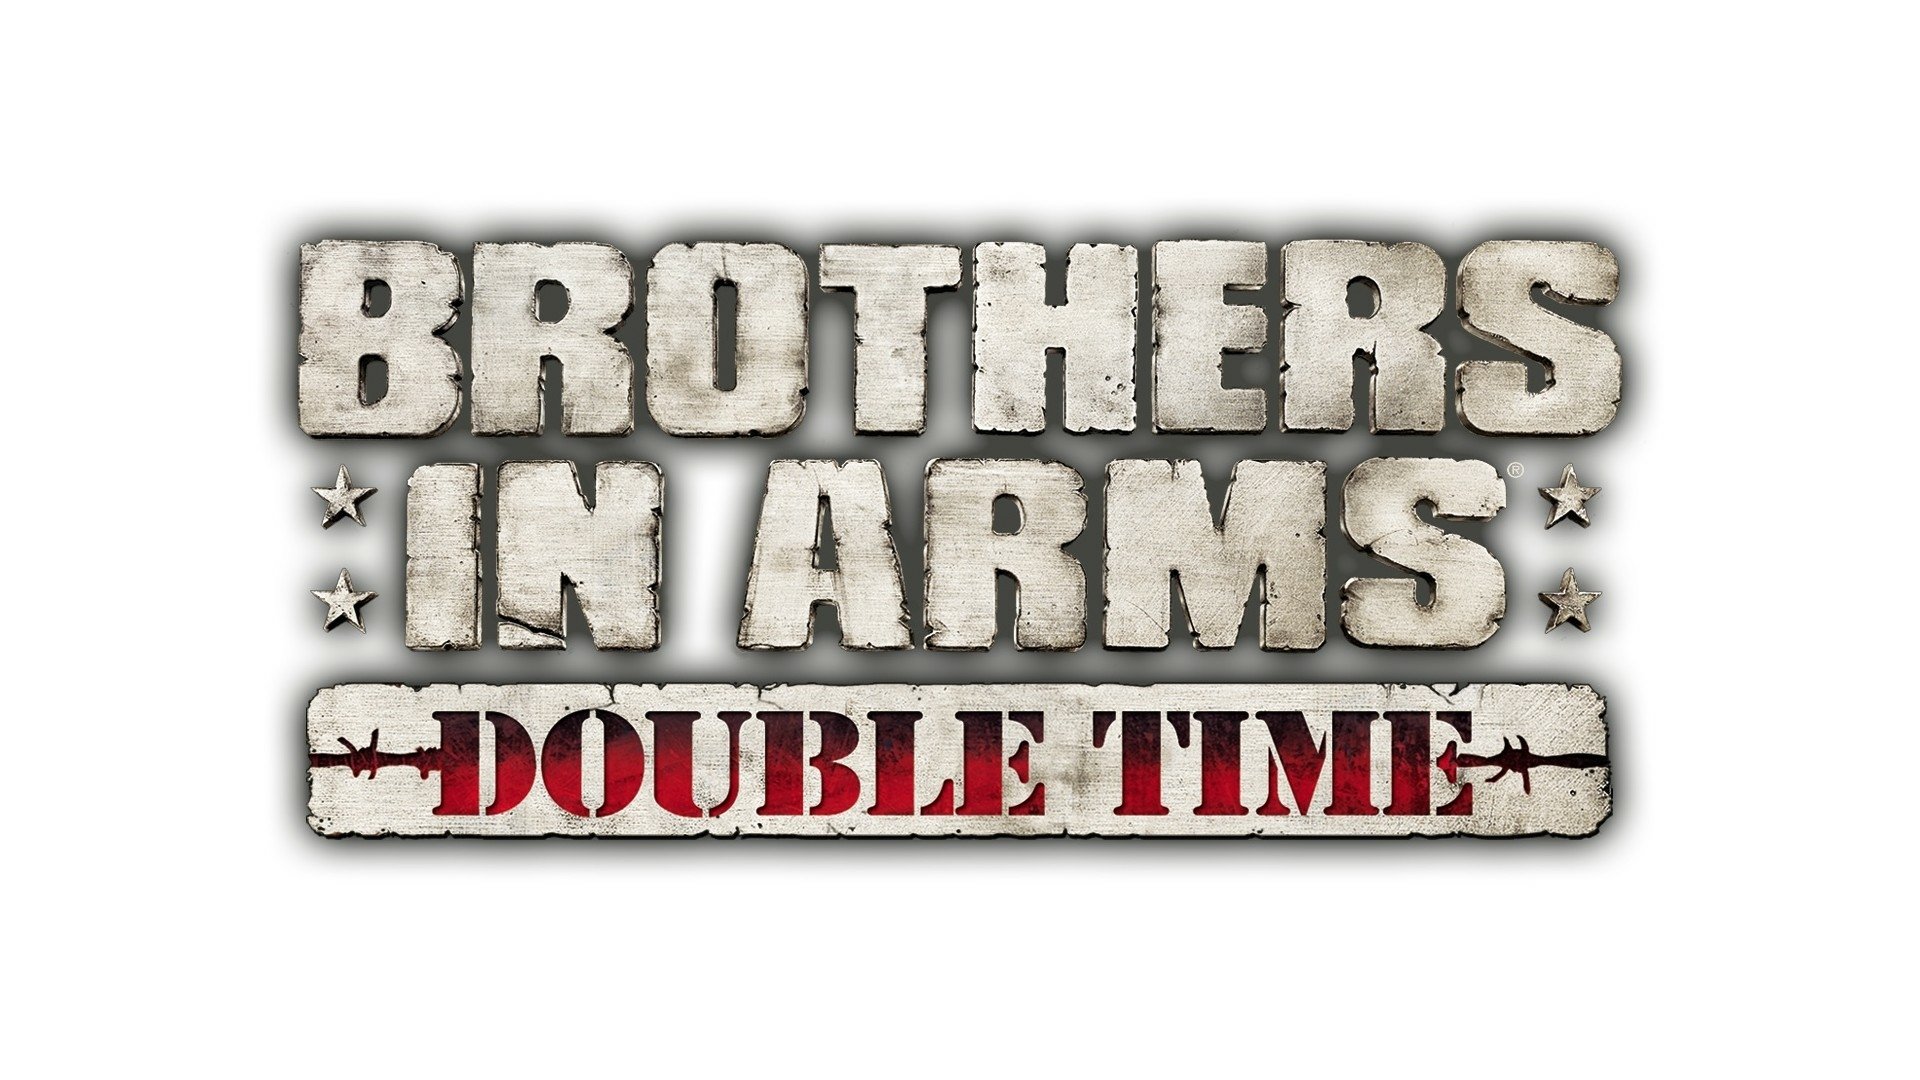 Дабл тайм. Brothers in Arms логотип. Brothers in Arms Double time. Дубль тайм. Эмблемы братья по оружию.